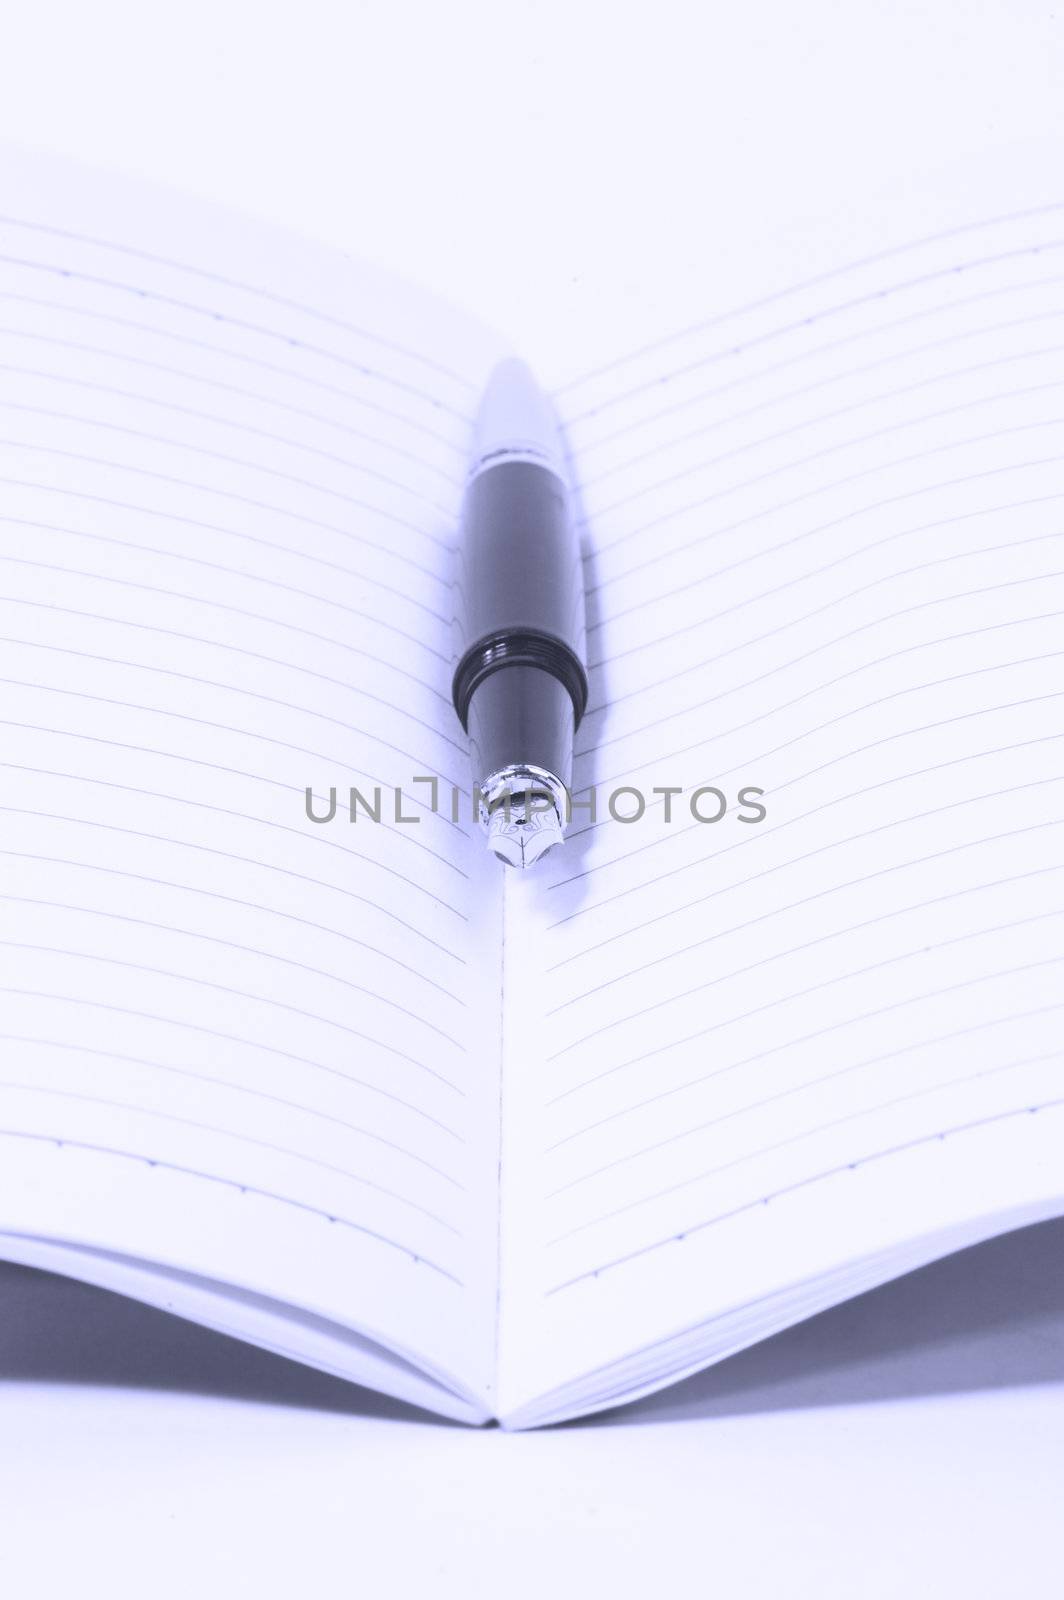 classic black fountain pen on open notebook,blue filter